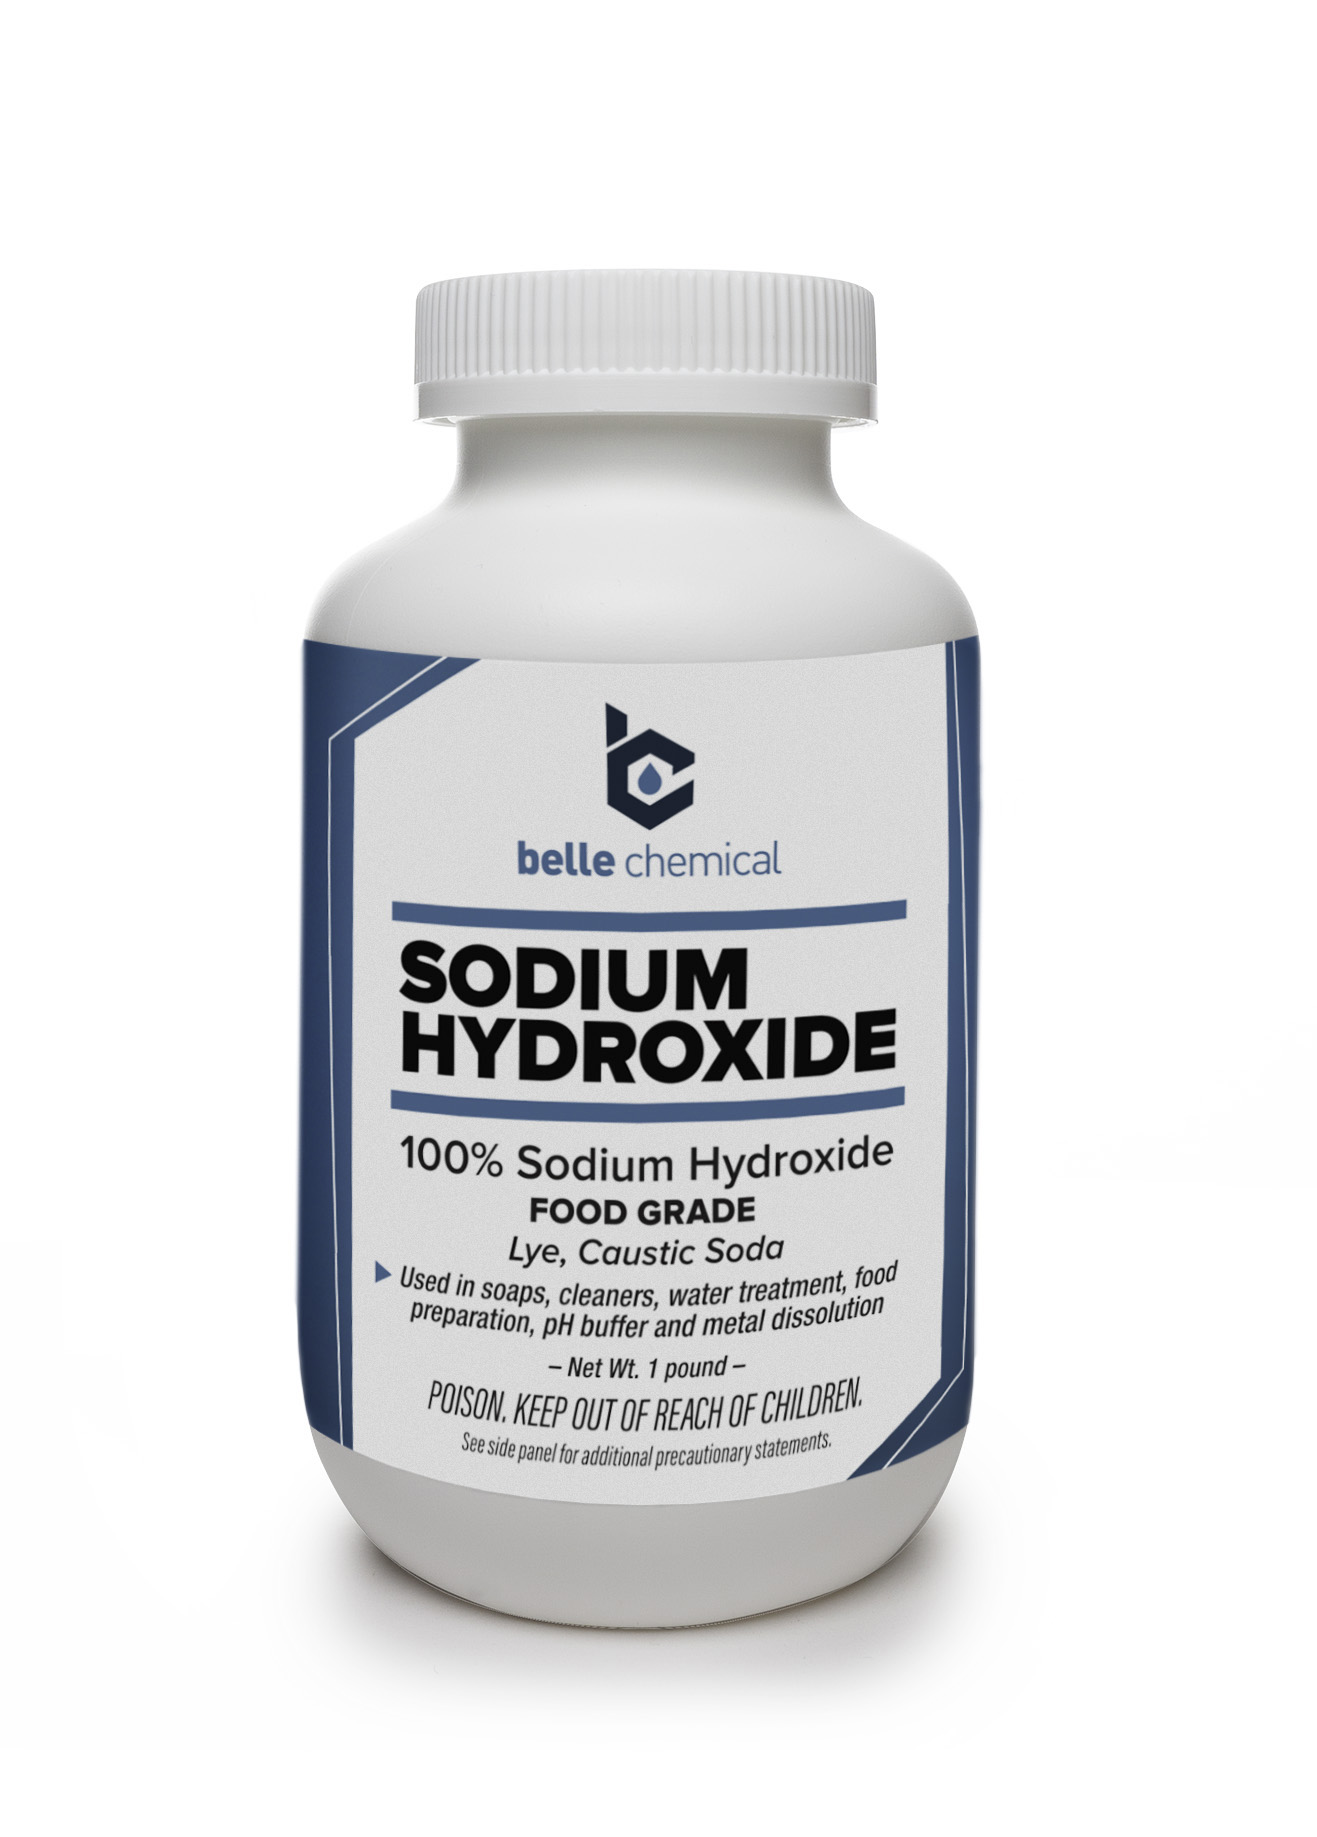 Sodium Hydroxide - Pure - Food Grade (Caustic Soda, Lye) (1 pound)